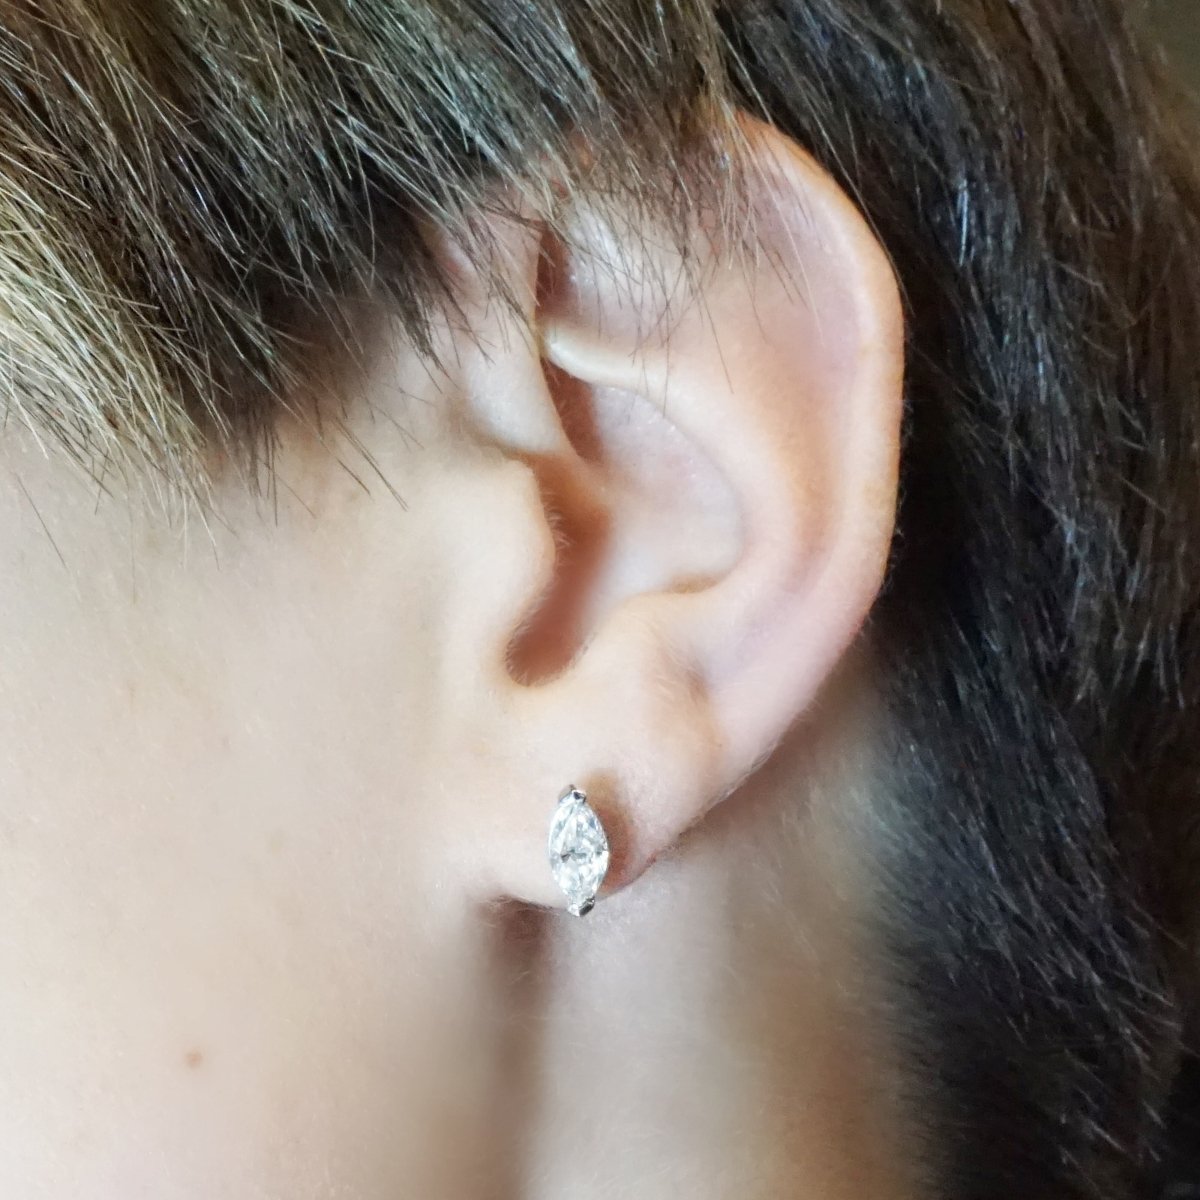 0.25-2.00 CT Marquise Cut Diamonds - Stud Earrings - Primestyle.com